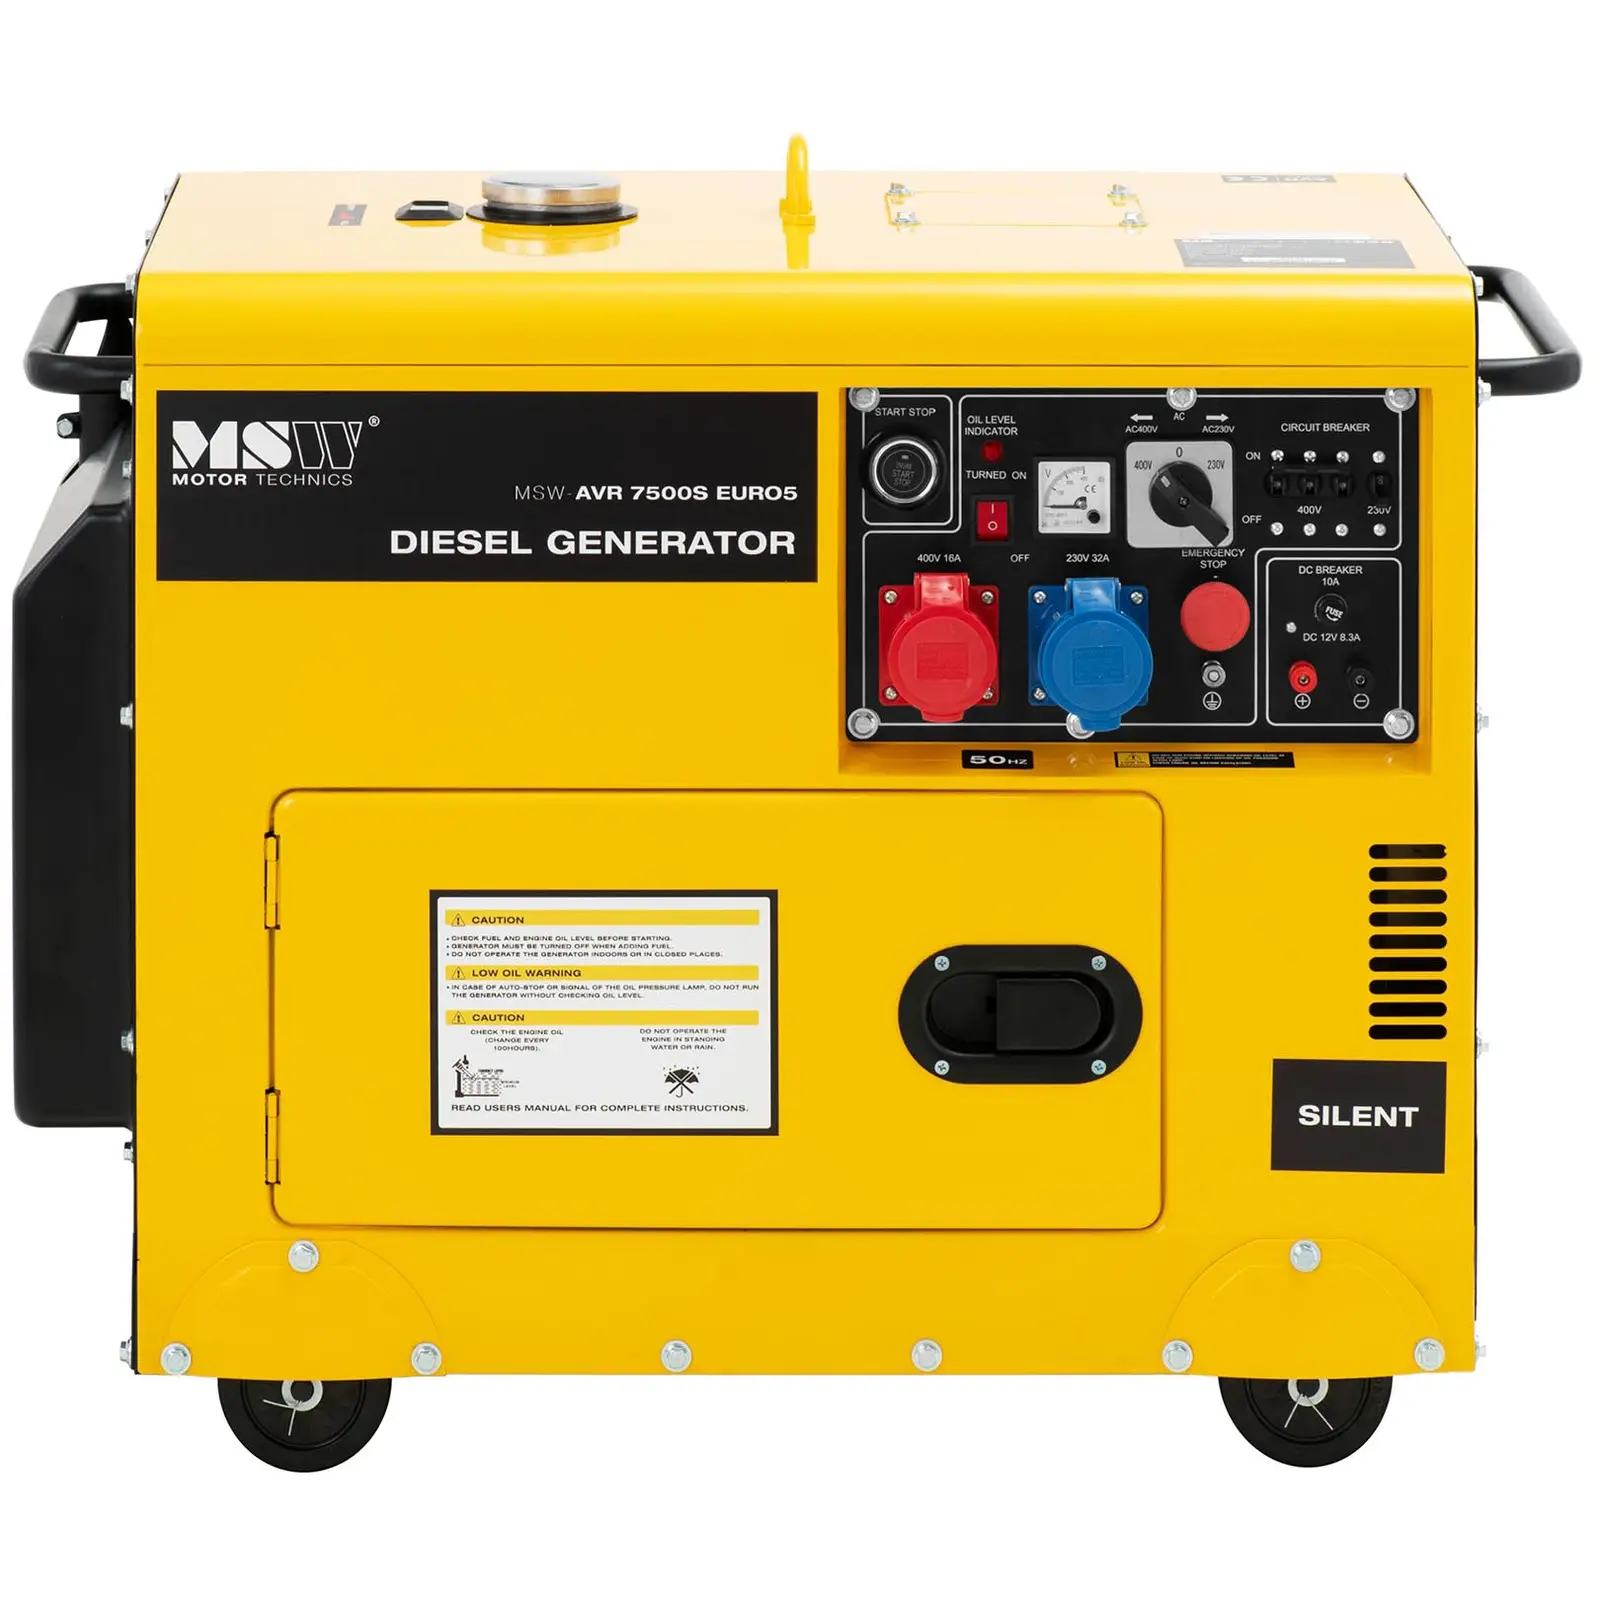 Dieselgenerator - 6370/7500 W - 16 l - 240/400 V - mobil - AVR - Euro 5